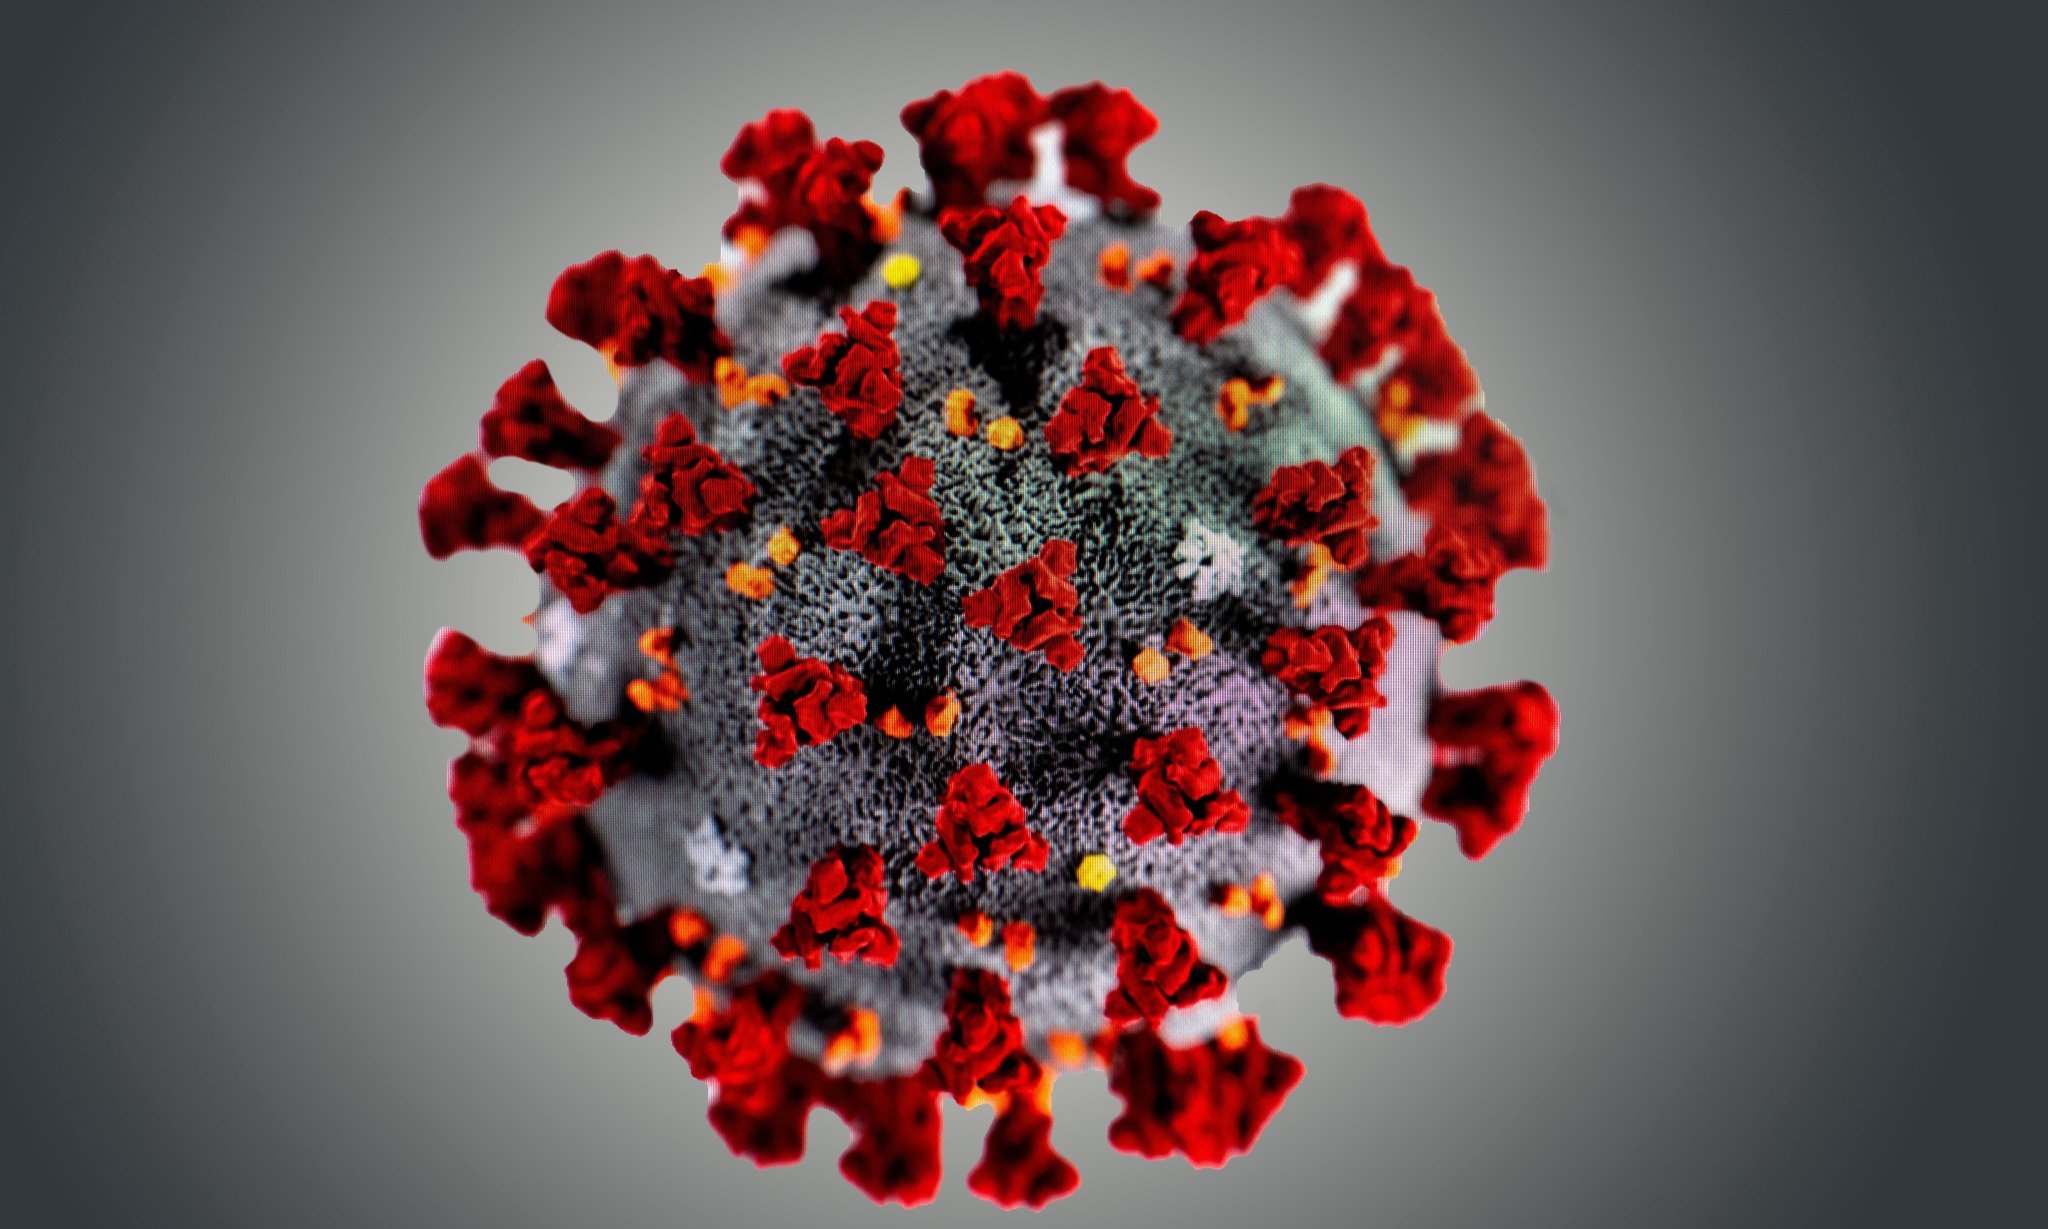 Coronavirus: Latest News